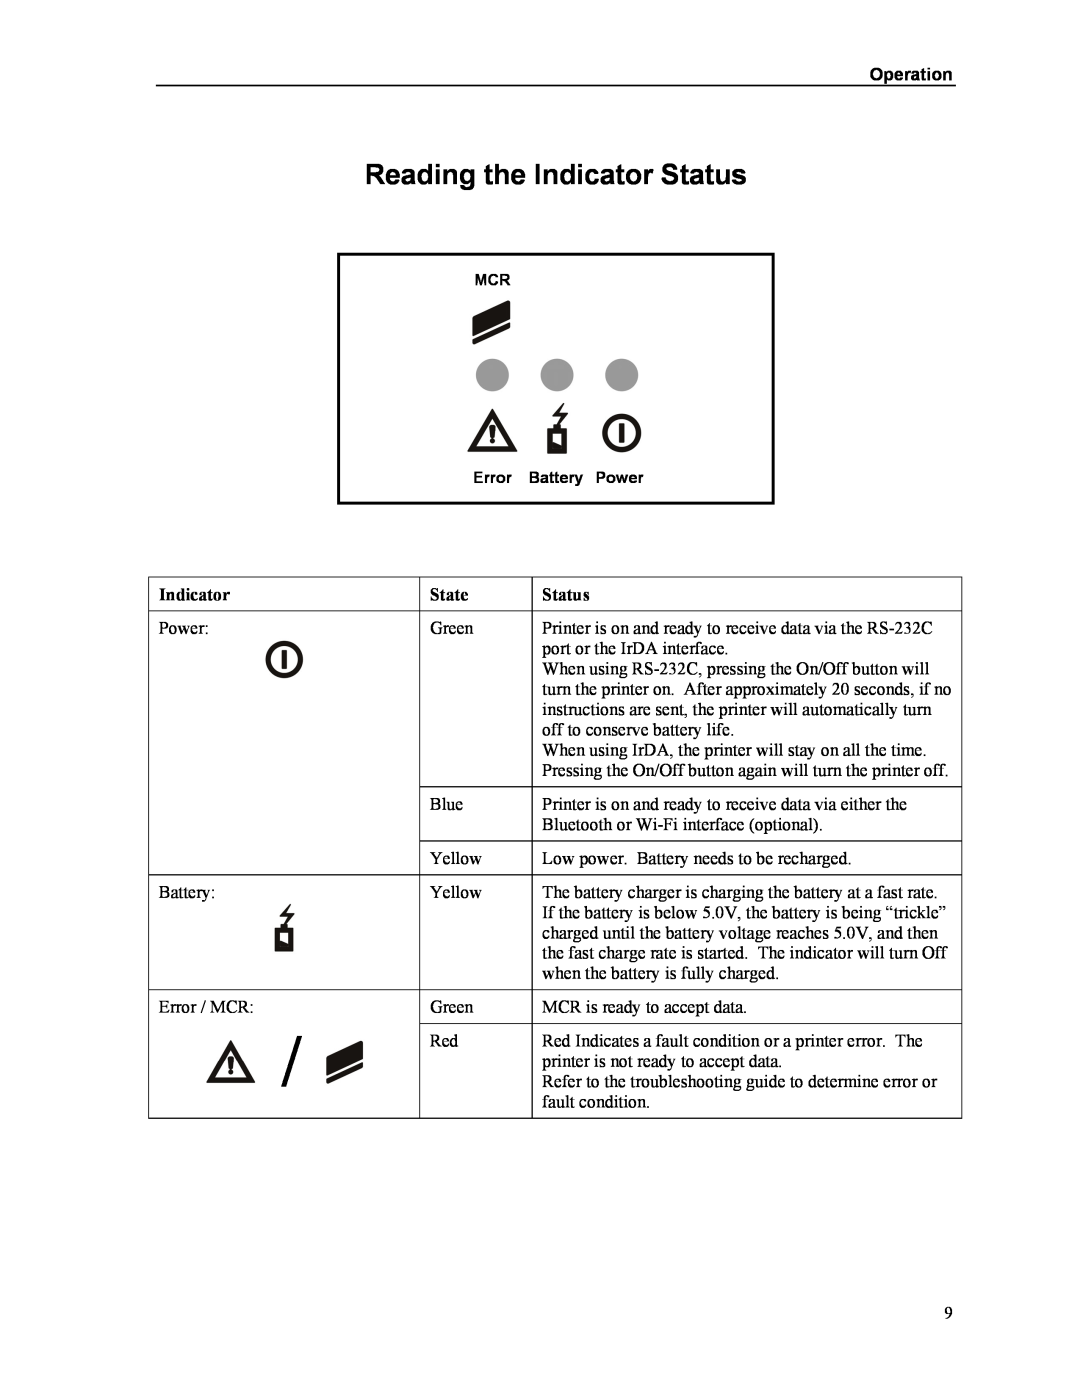 Printek Mt3-II manual Reading the Indicator Status, State, Operation 